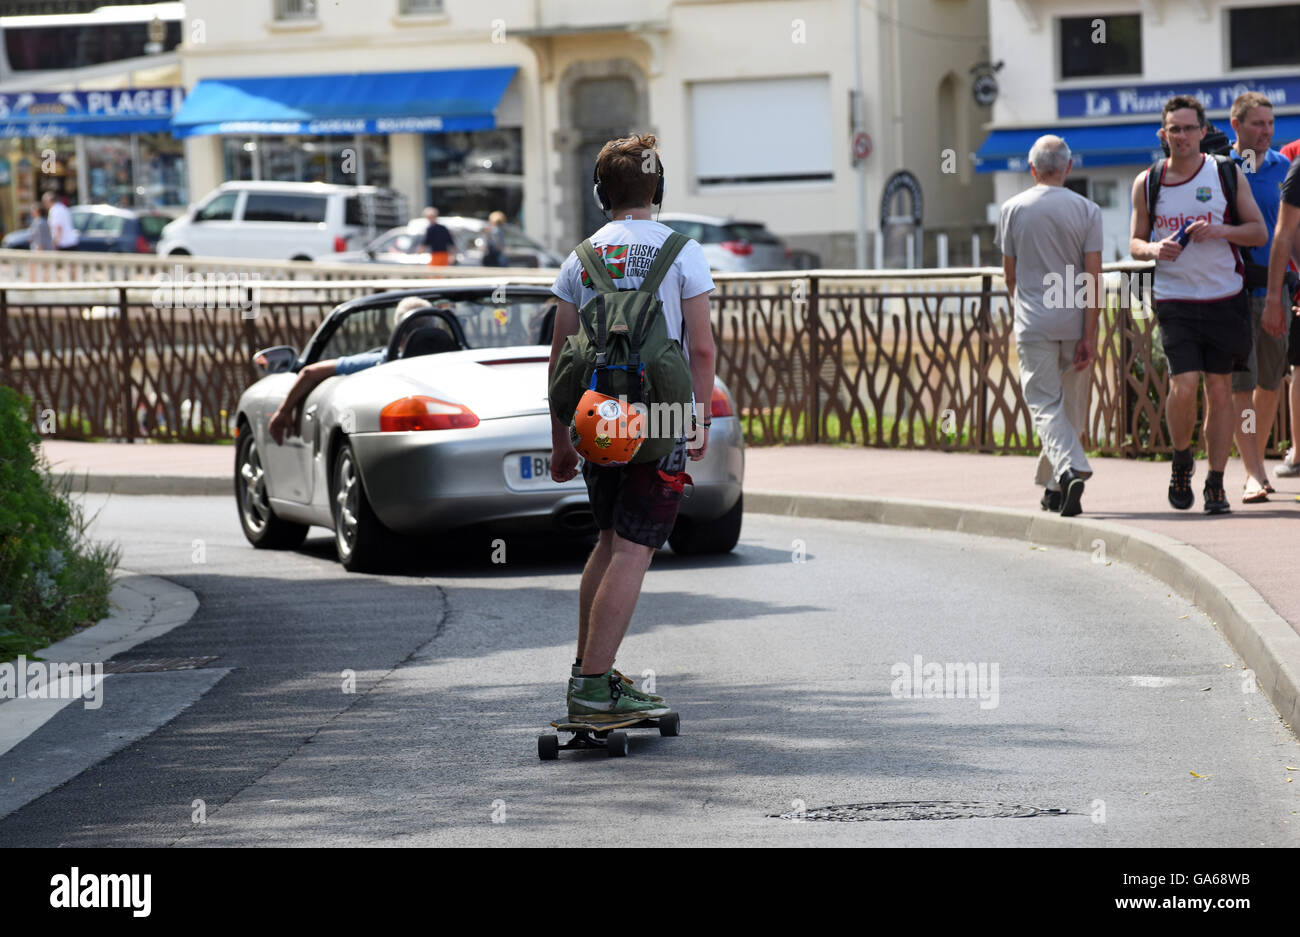 Man boy skate boarding on road Stock Photo